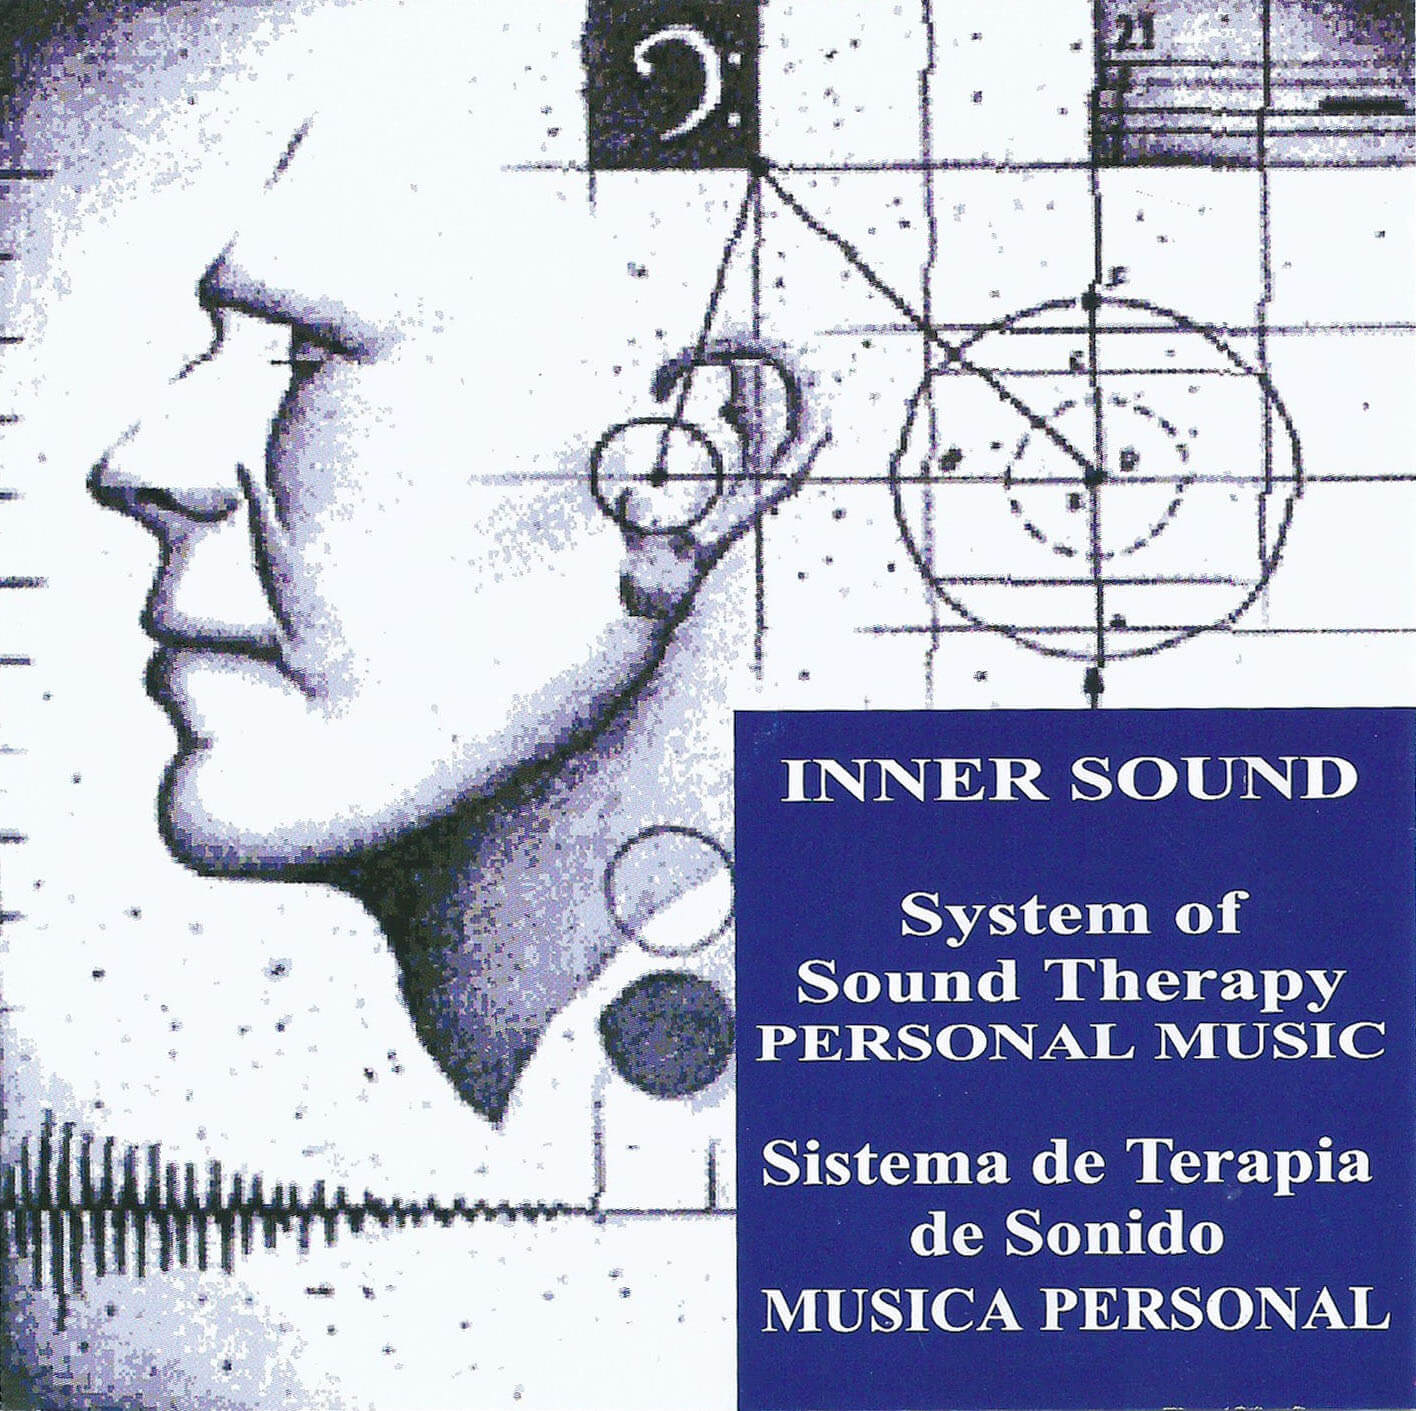 Musica Terapéutica Personalizada - Sonido Terapéutico - María Fernanda Canal V.